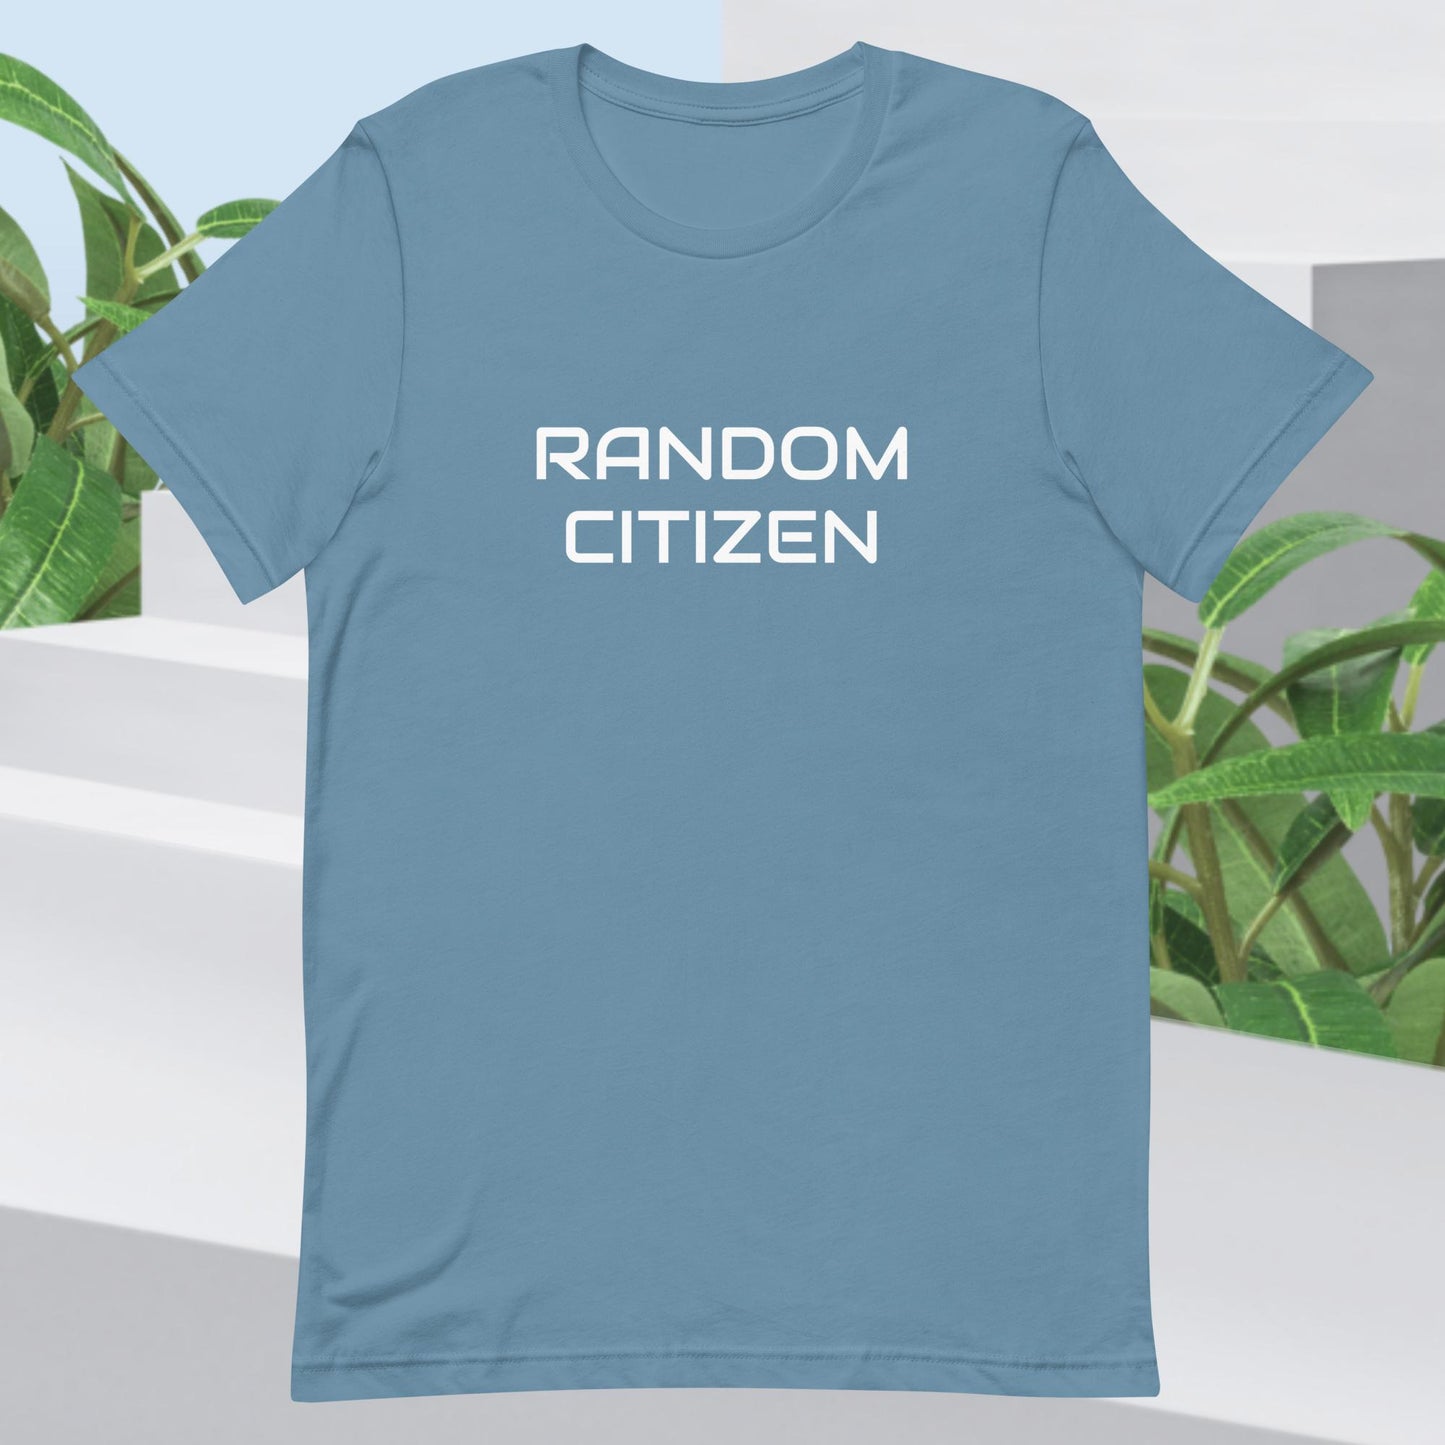 Random Citizen unisex t-shirt